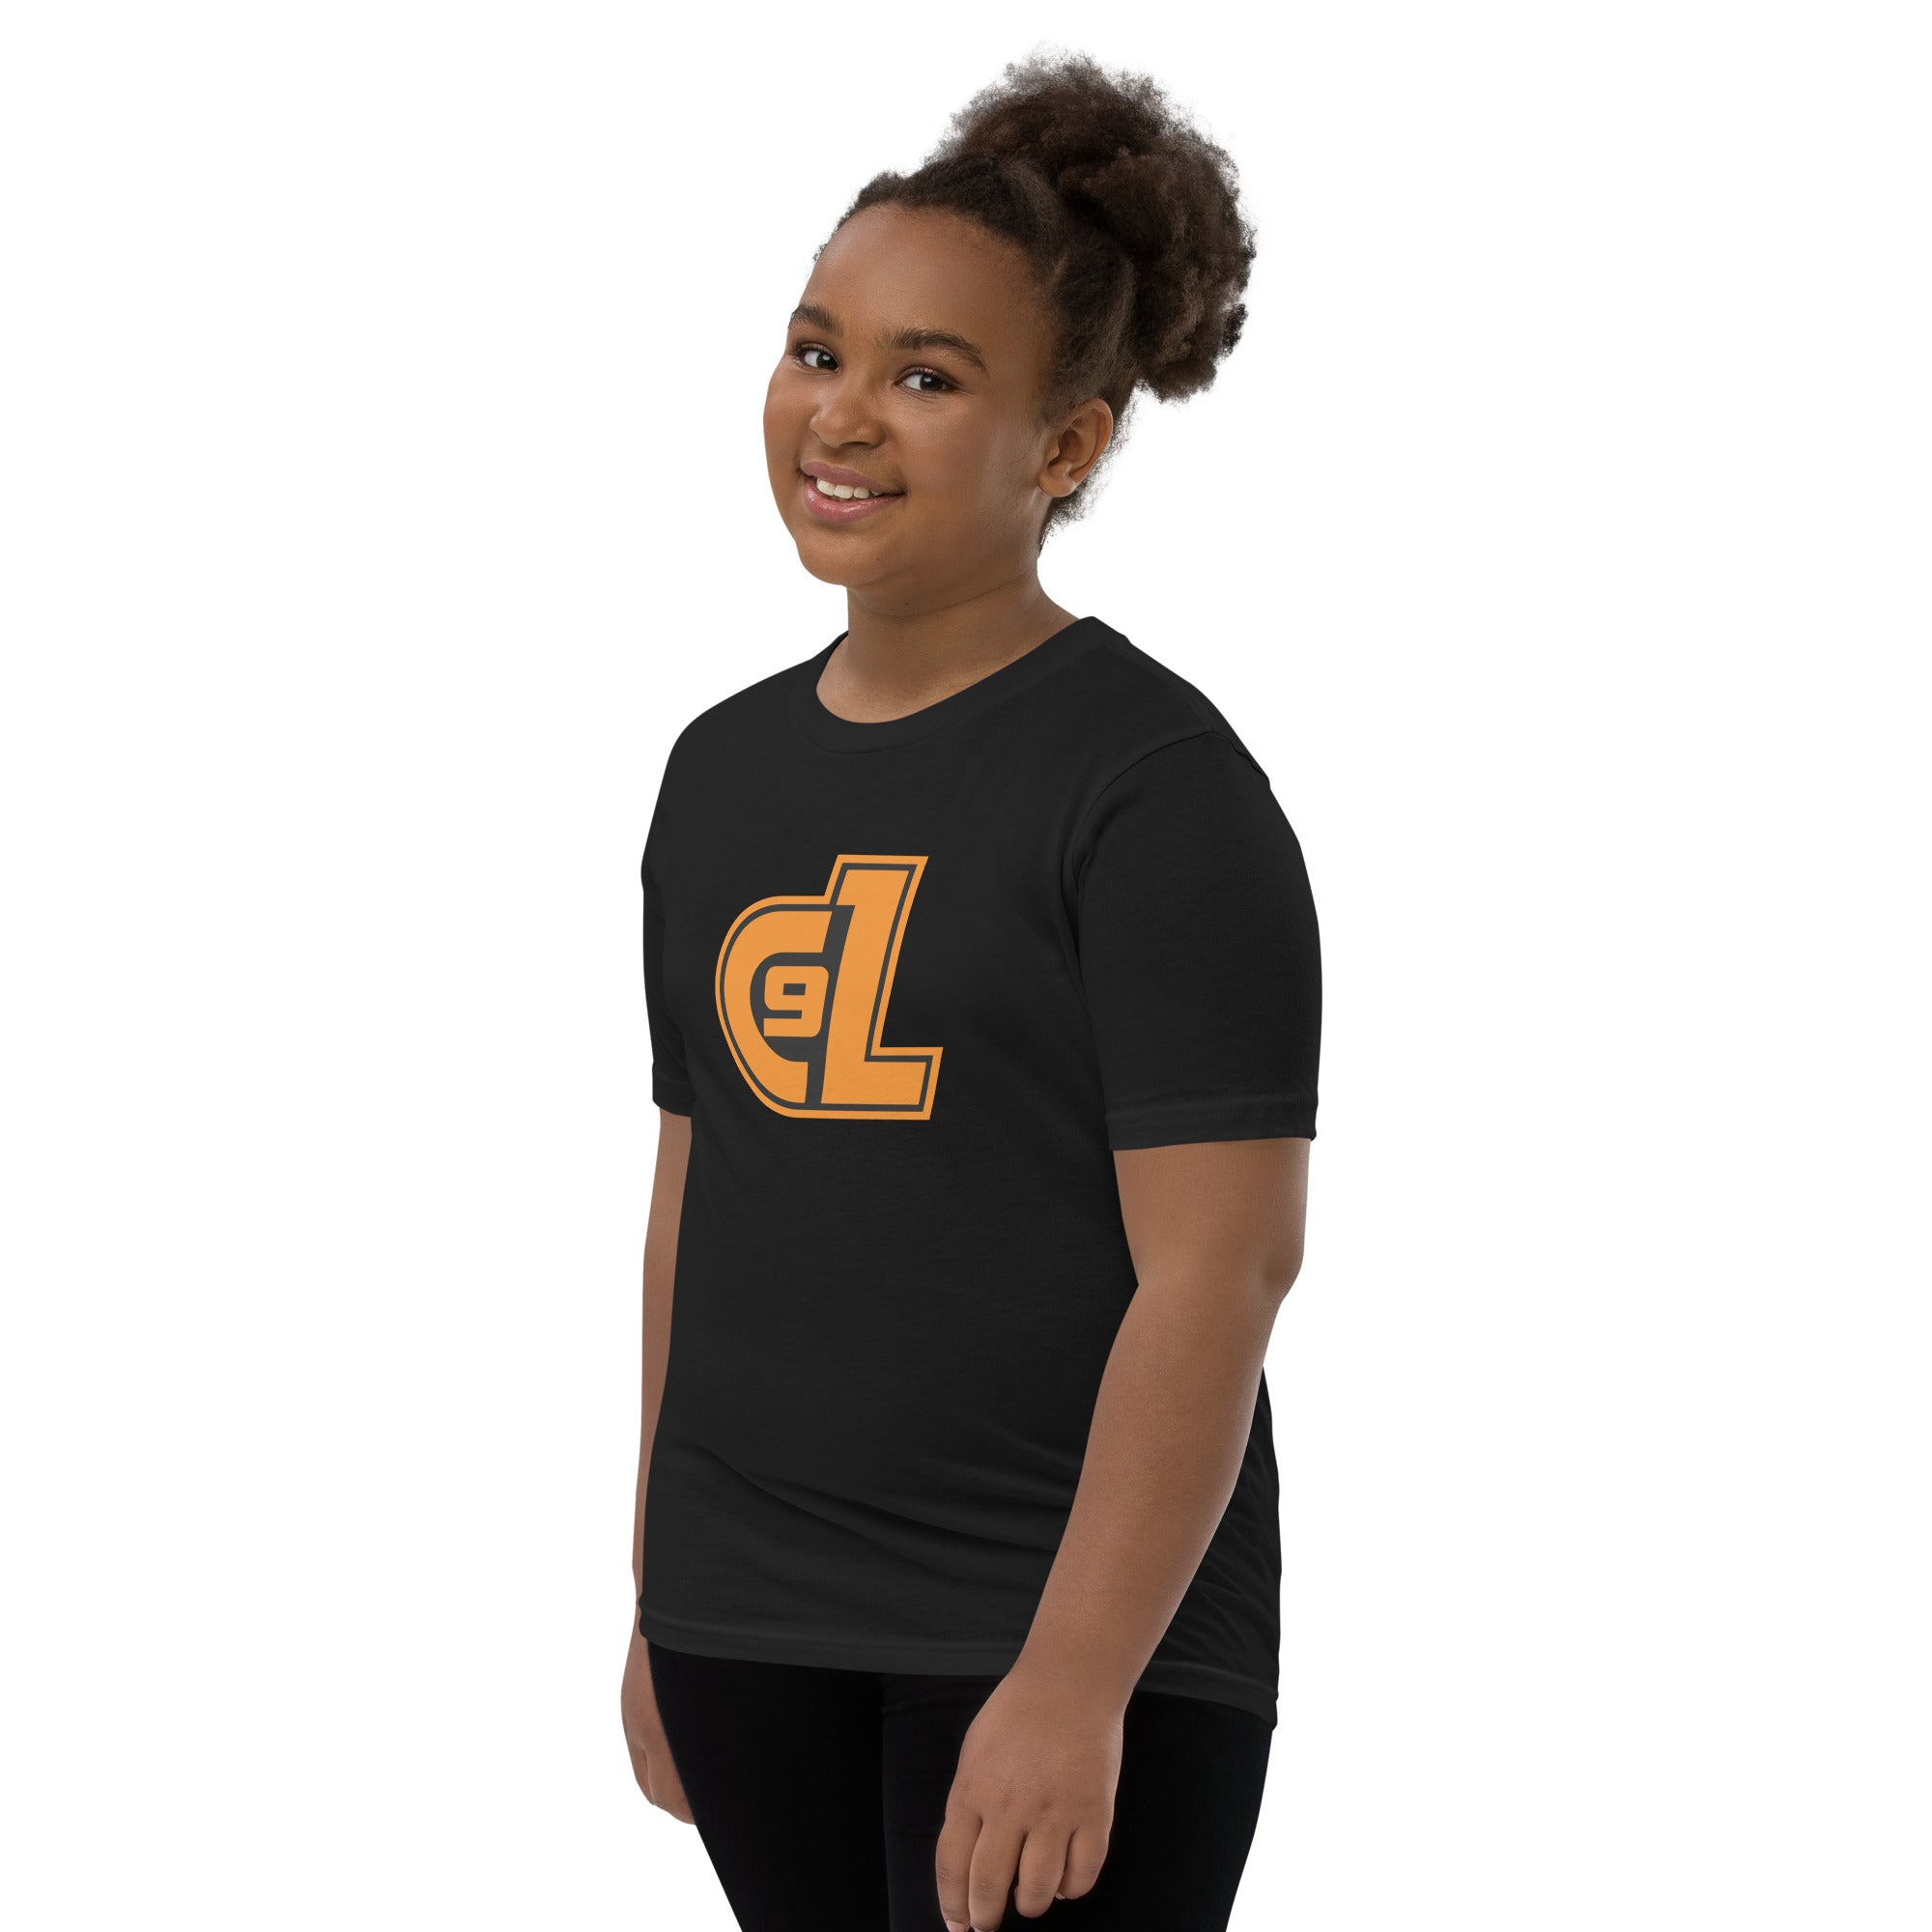 Cortland Lawson CL9 Youth Short Sleeve T-Shirt